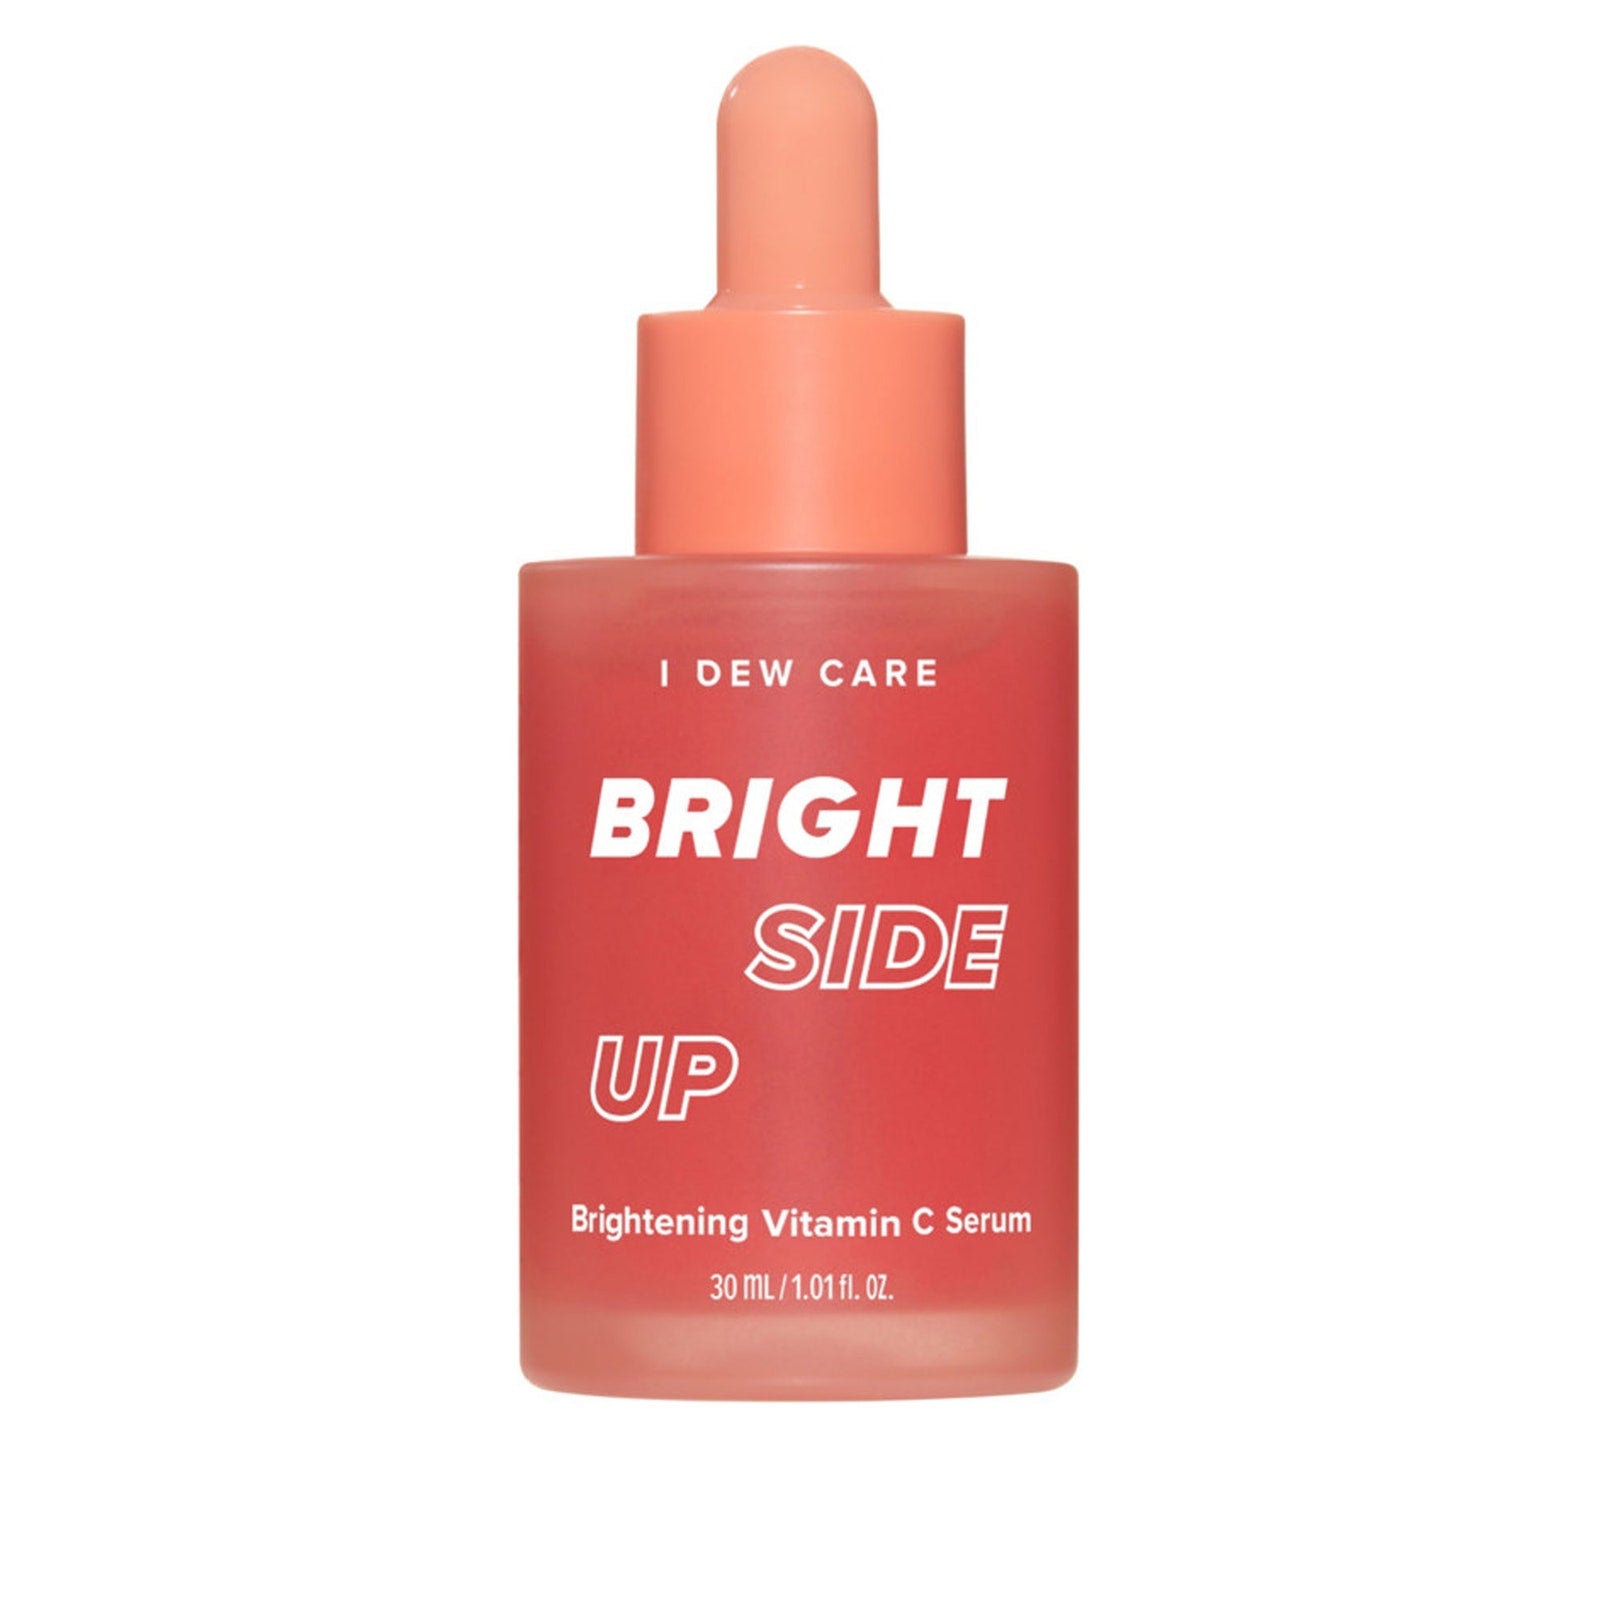 I DEW CARE Bright Side Up Brightening Vitamin C Serum